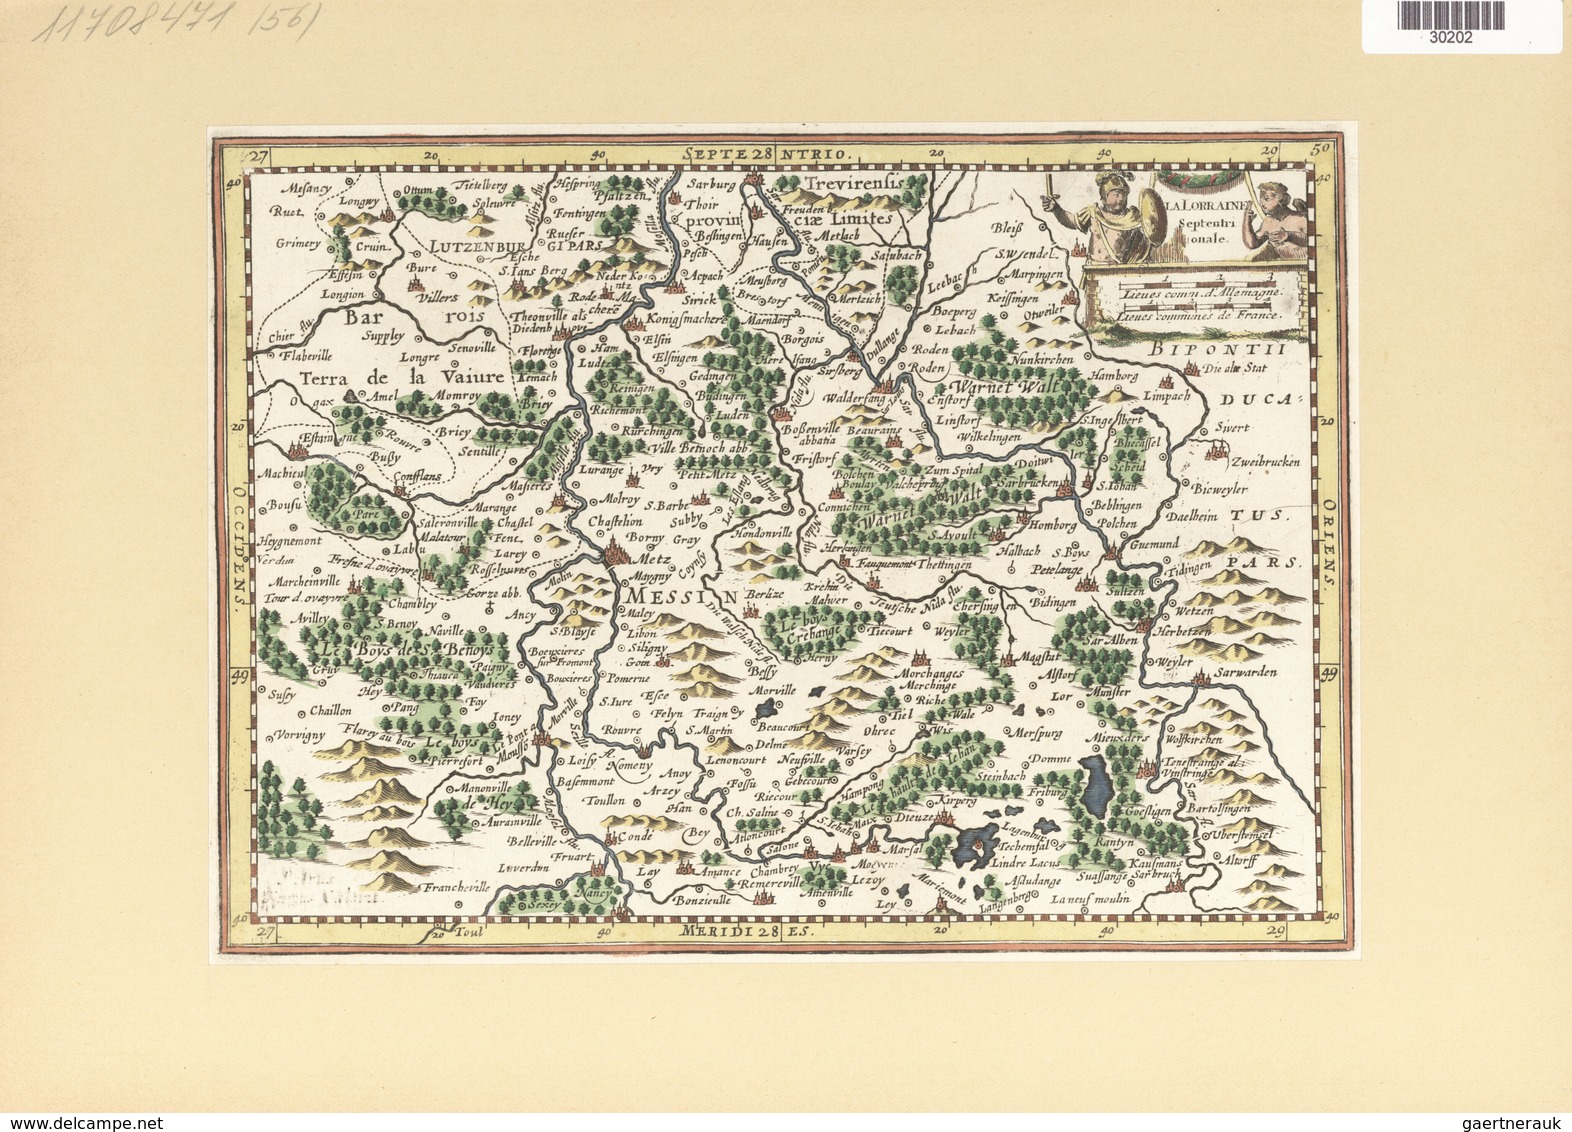 Landkarten Und Stiche: 1734. La Lorraine Septentionale, Published In The Mercator Atlas Minor 1734 E - Geographie